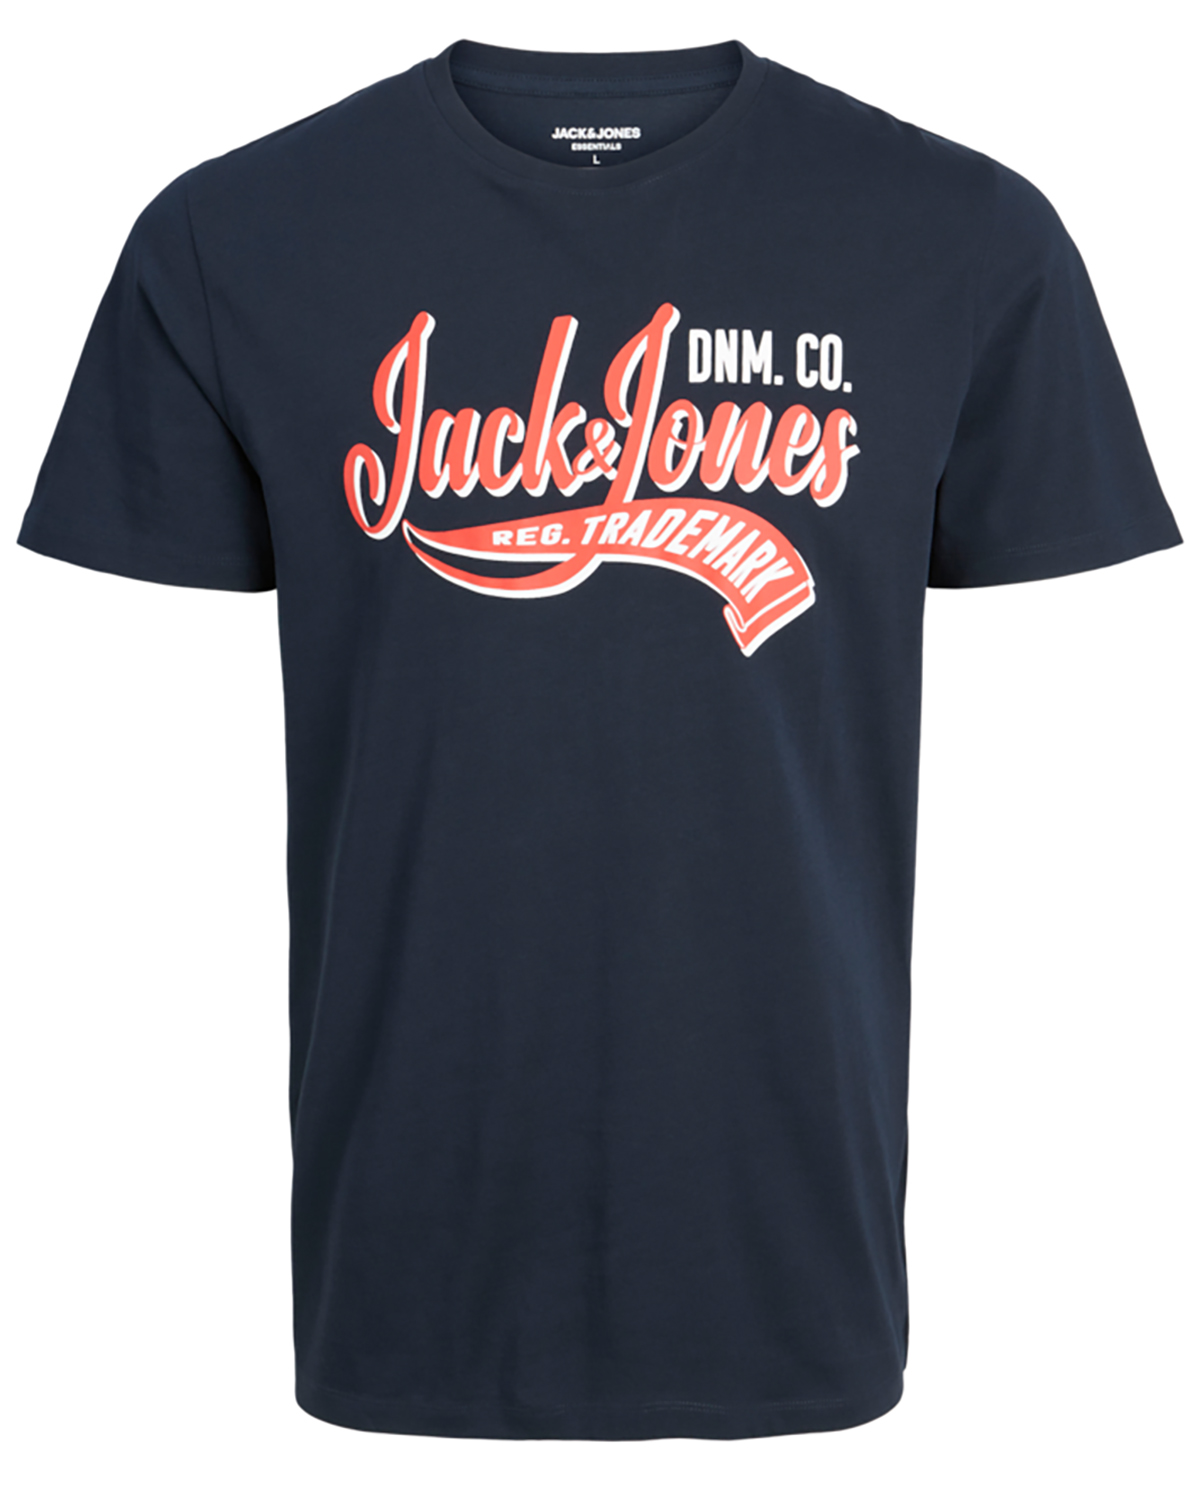 Se Jack & Jones JR t-shirt s/s, Logo tee, navy - 176,16år hos Umame.dk